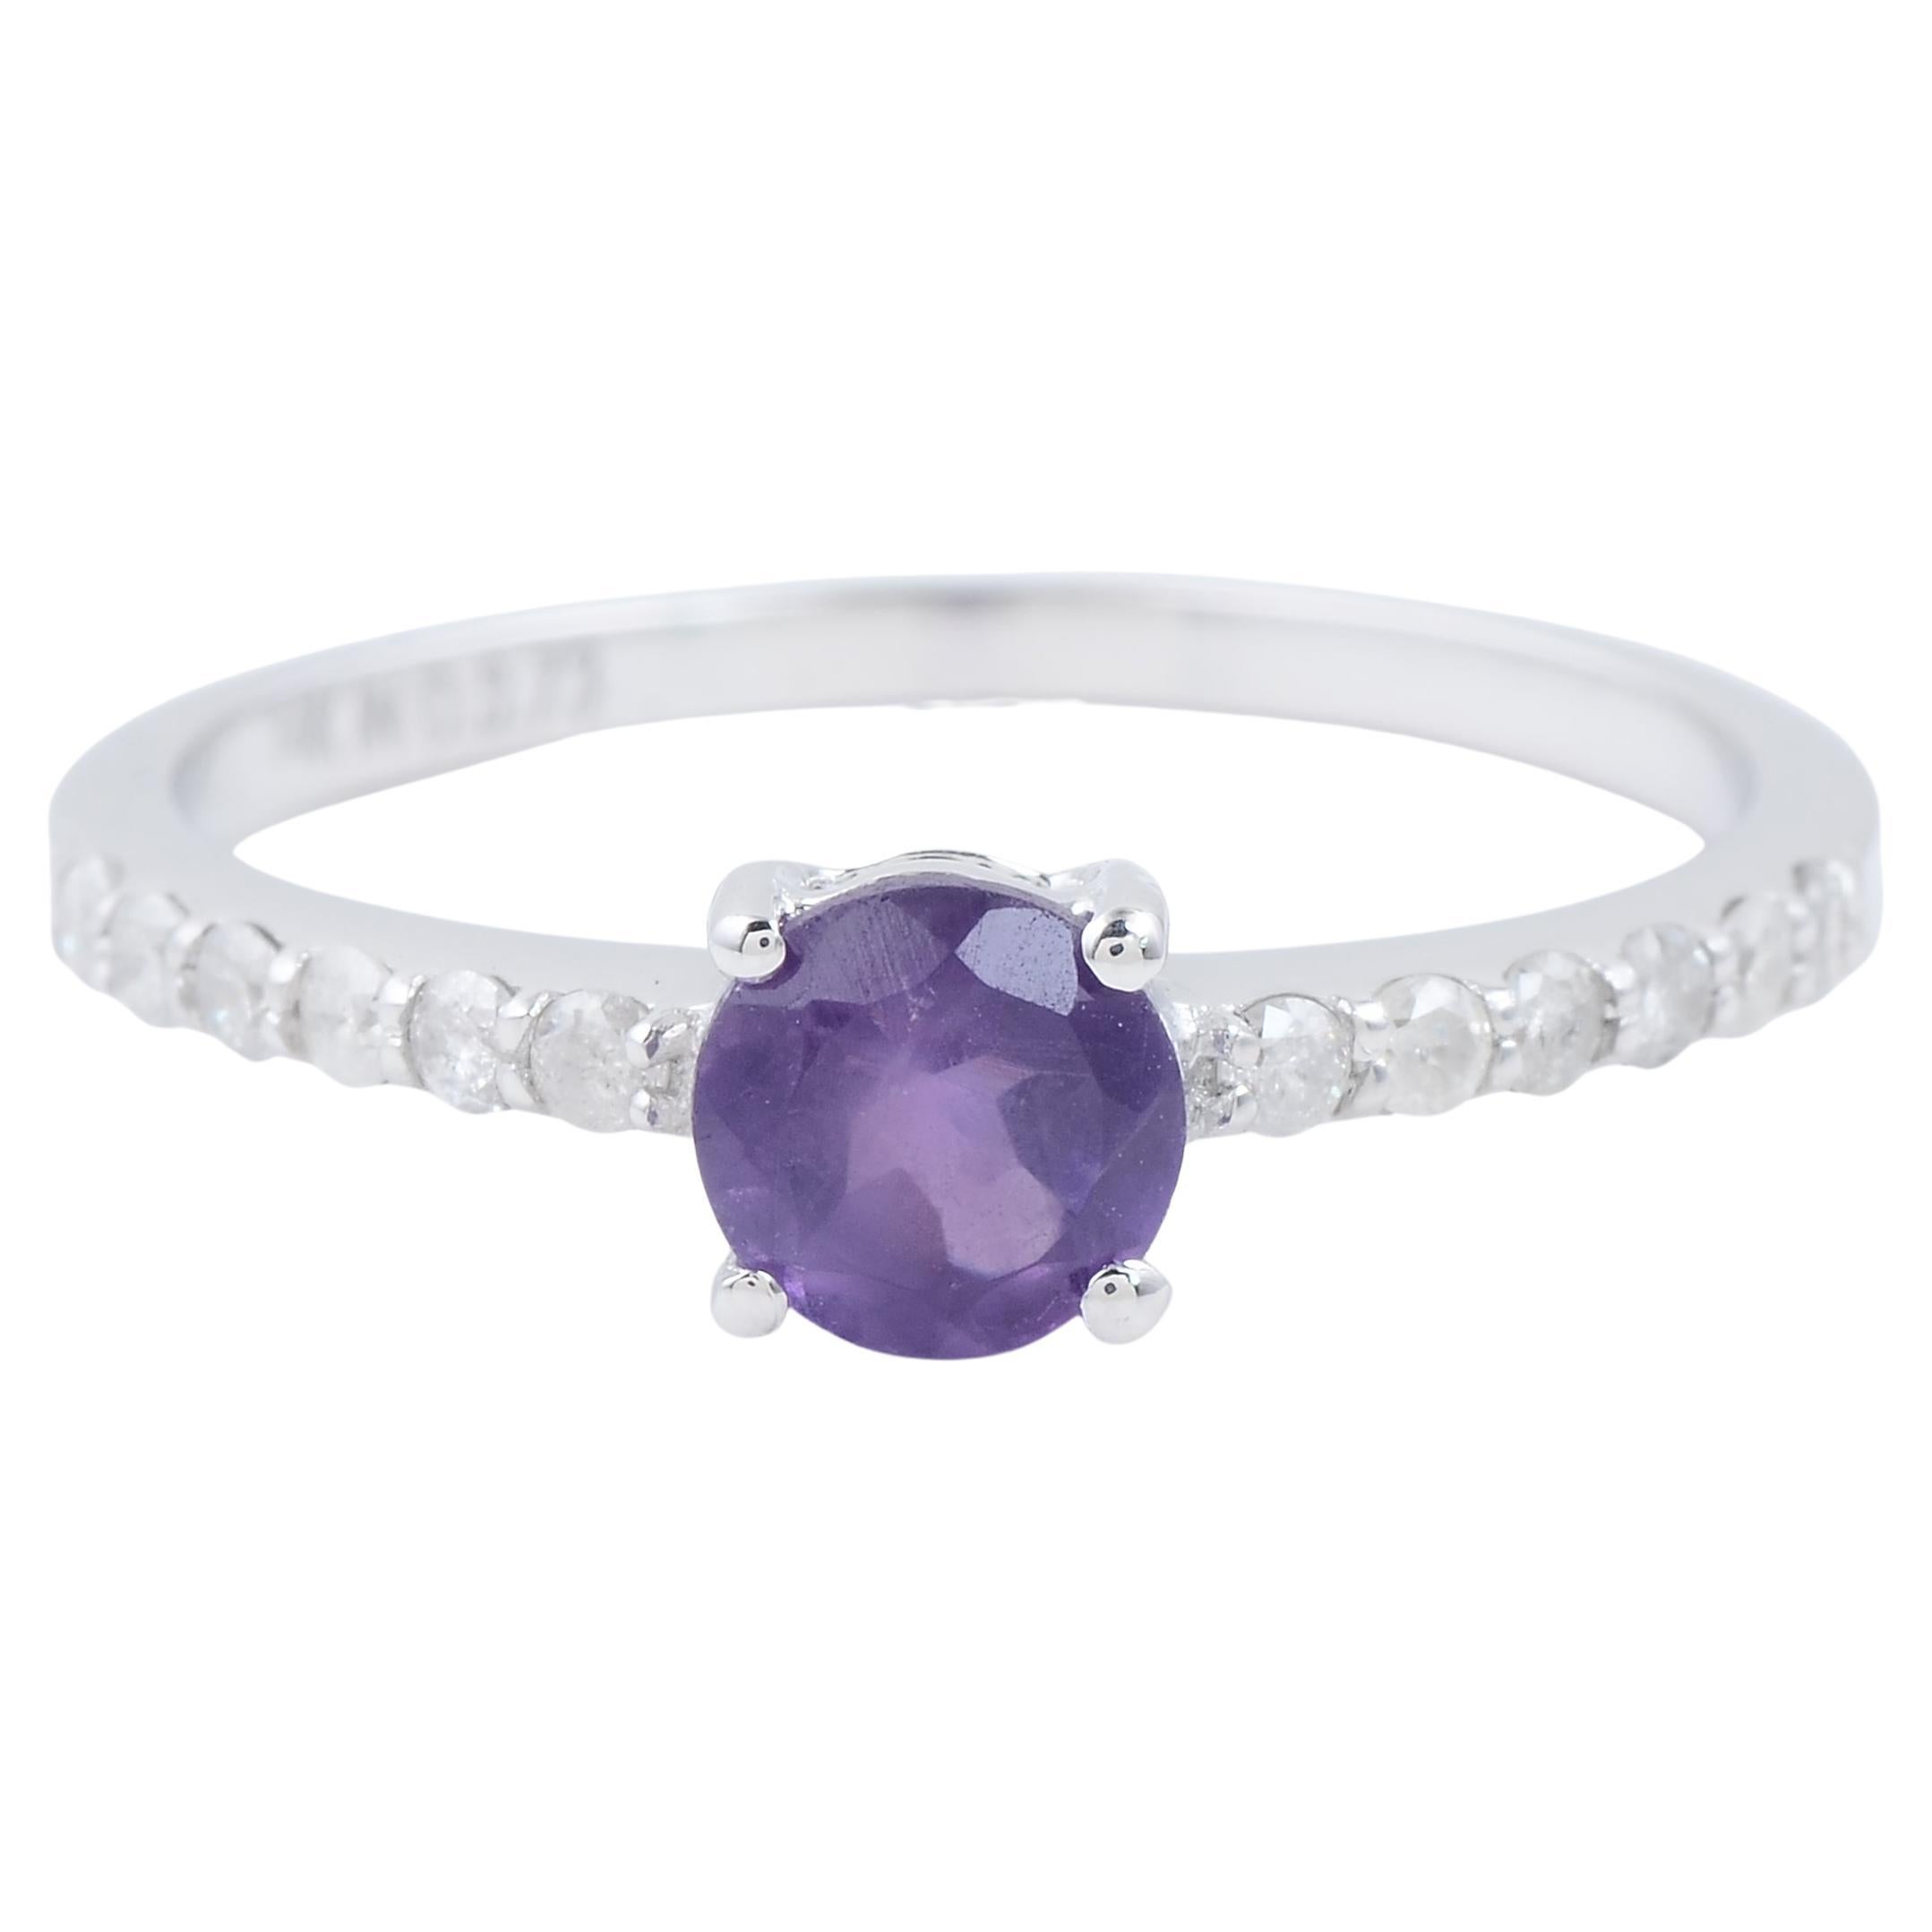 Luxurious 14K Amethyst & Diamond Cocktail Ring, Size 6.75 - Statement Jewelry